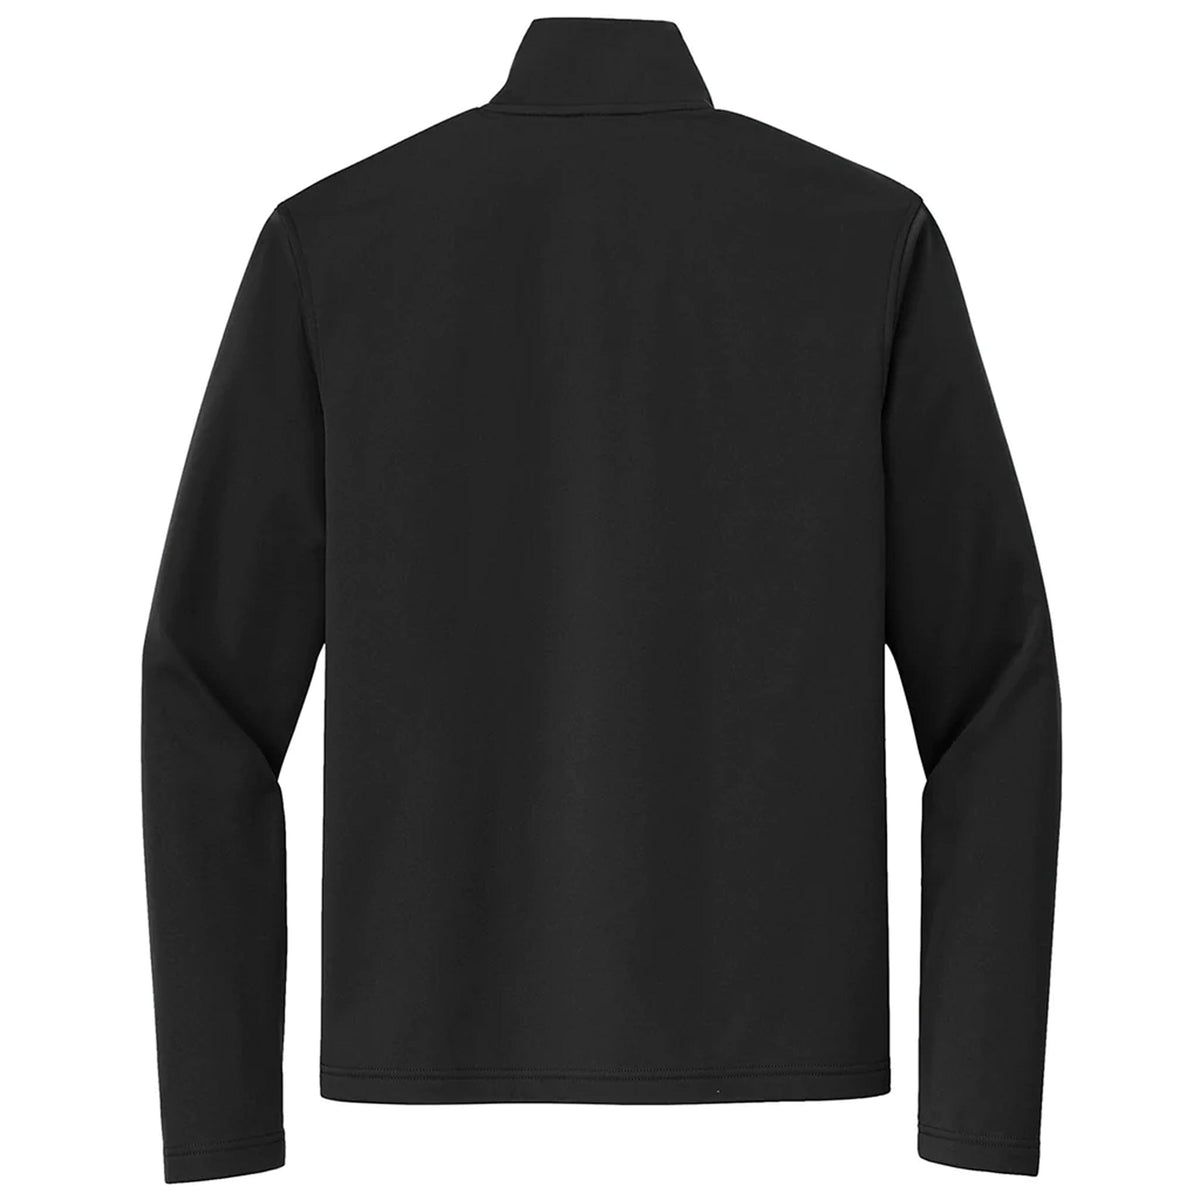 Aluminum Embroidered Flexshell Black Jacket